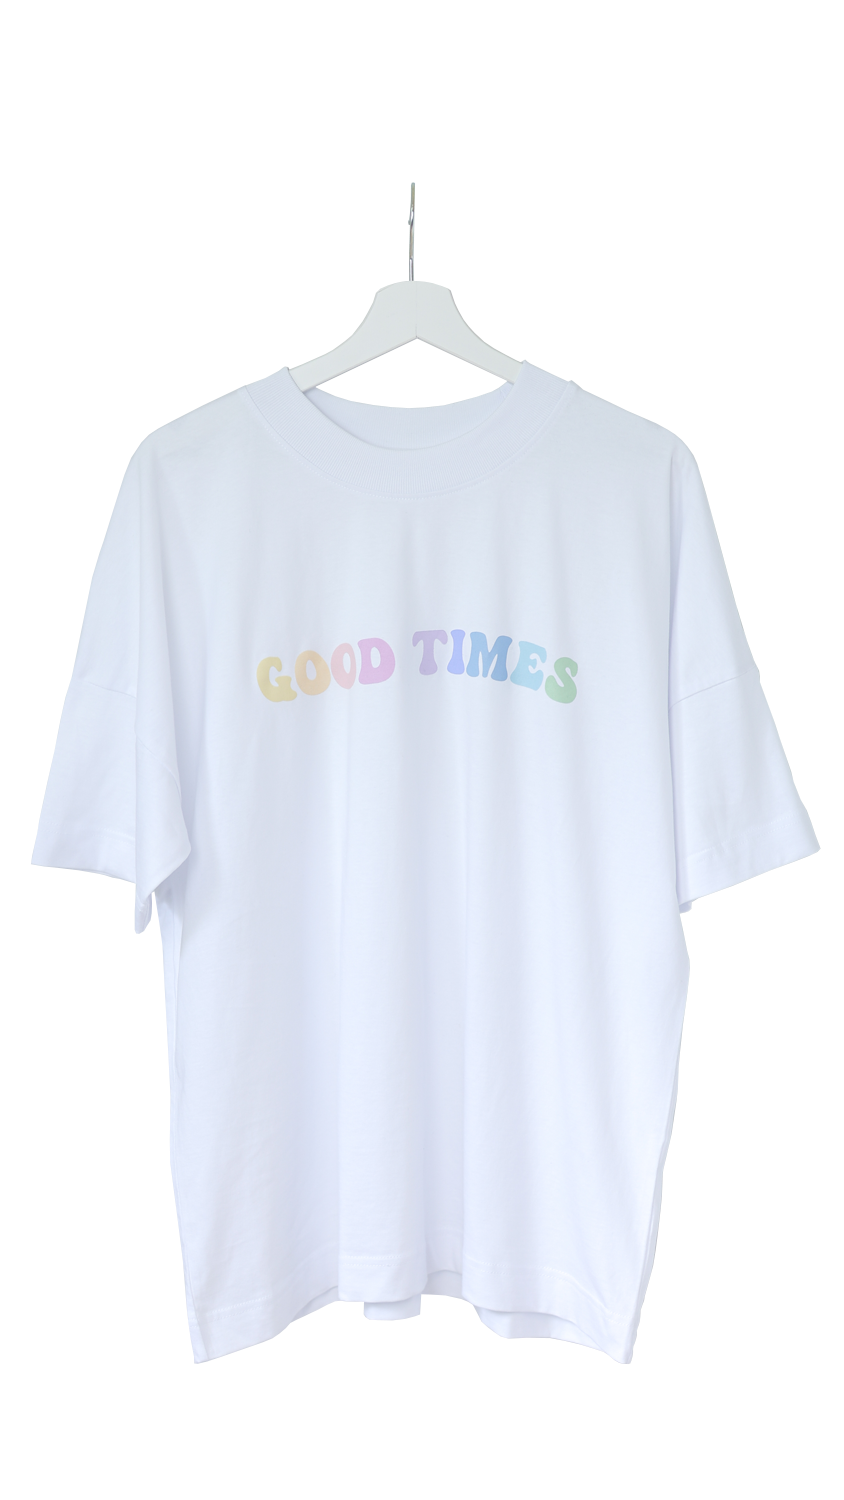 Good Times Shirt